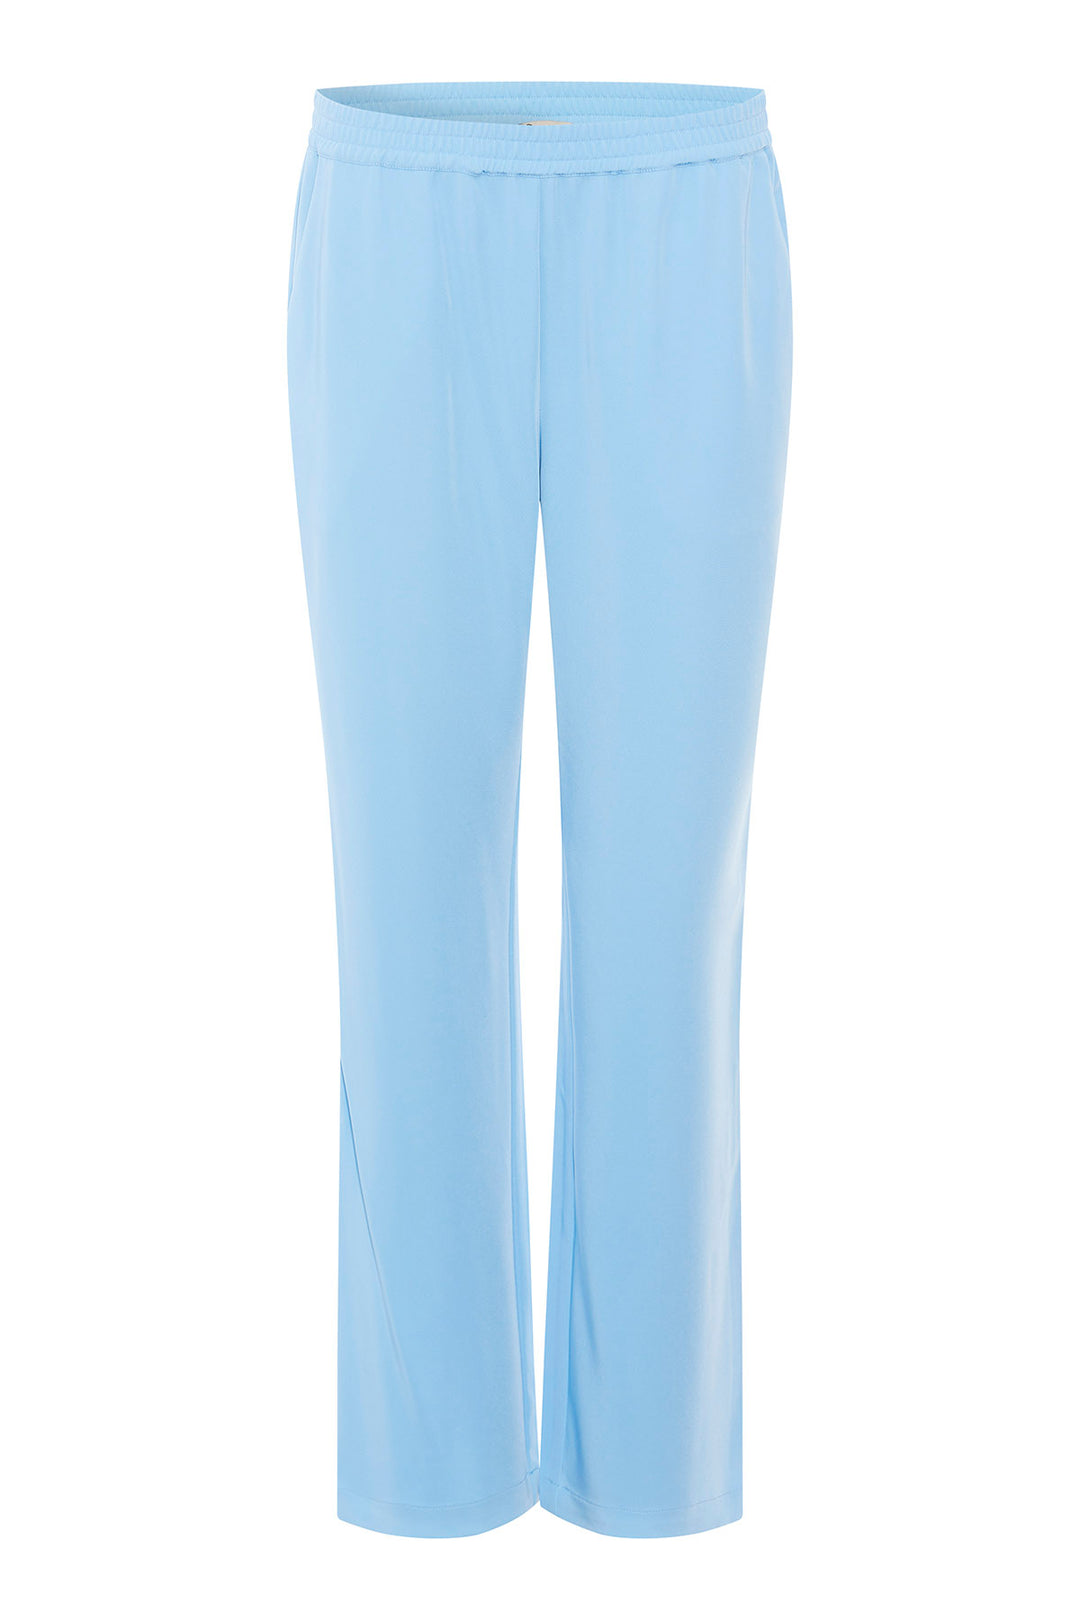 PBO Amalie pants TROUSERS 227 Heritage blue